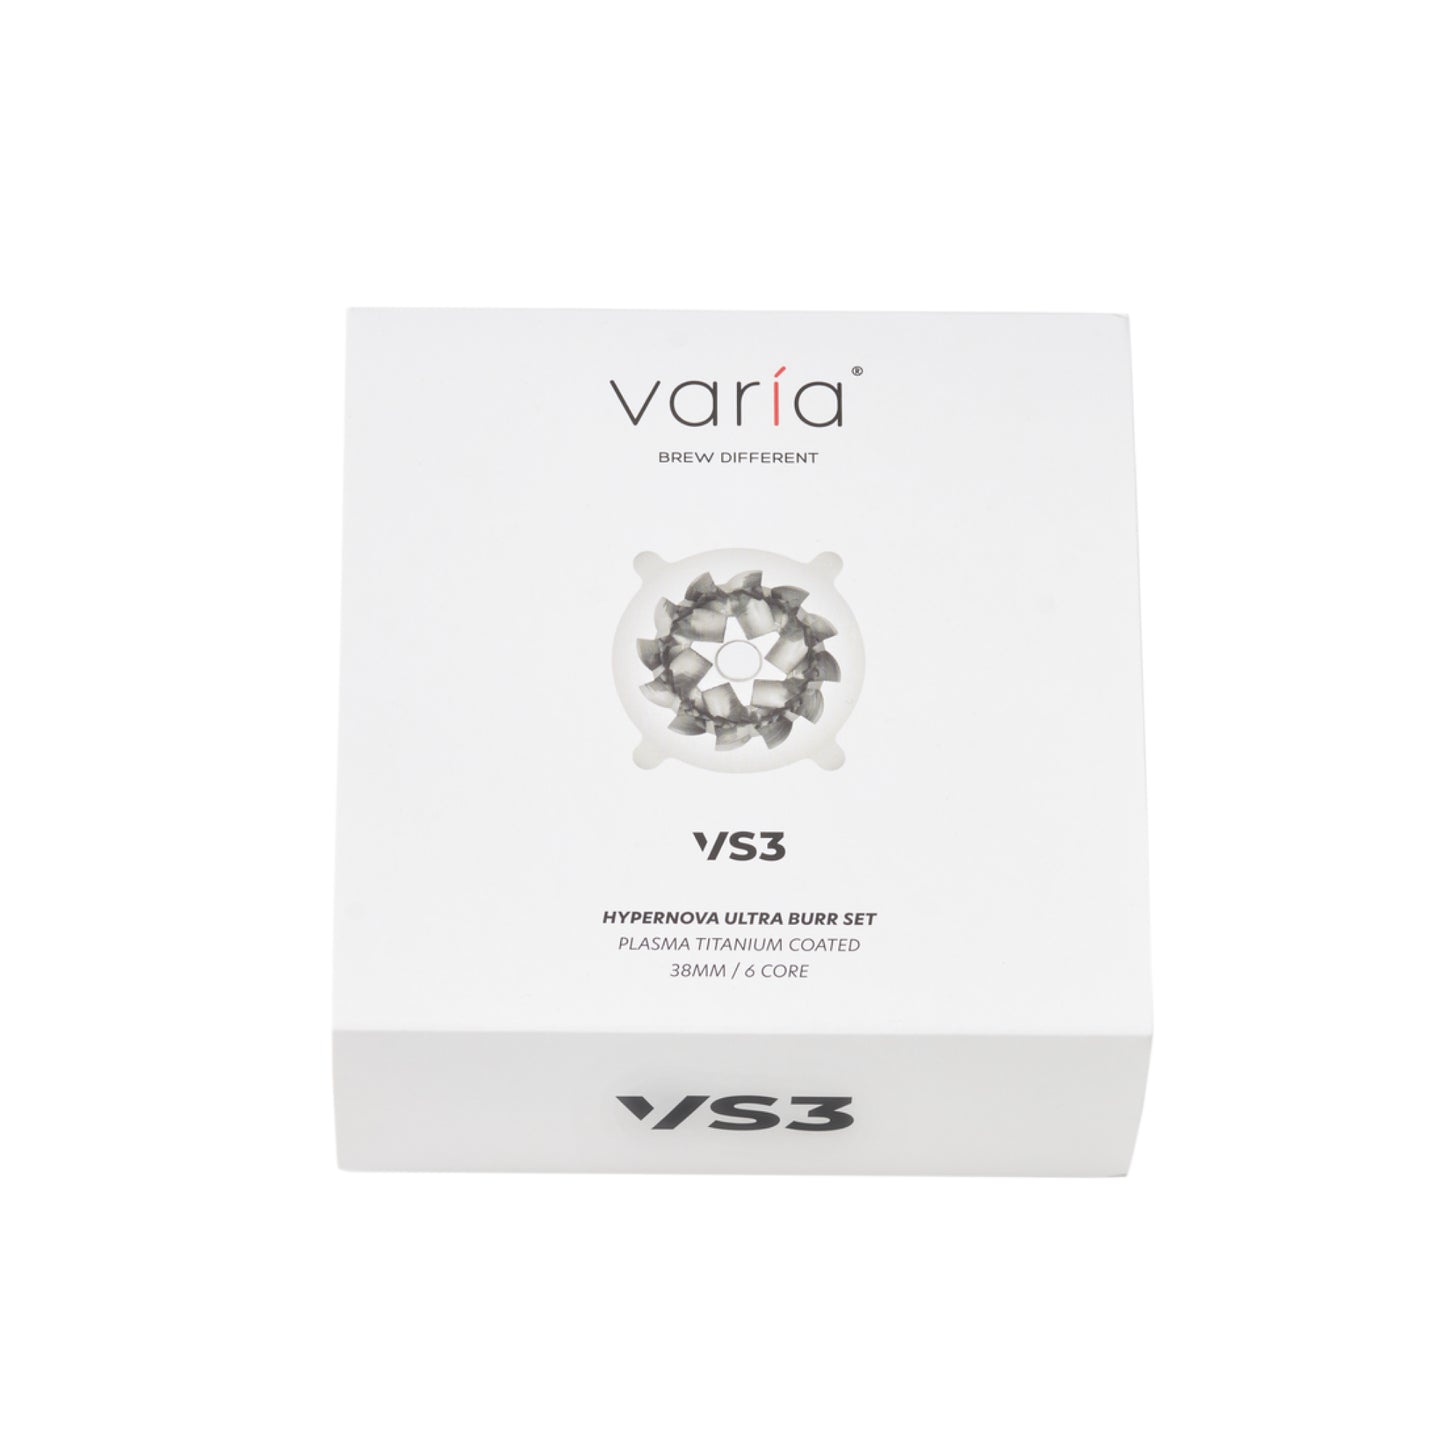 Varia VS3 Hypernova coffee grinder cutter upgrade